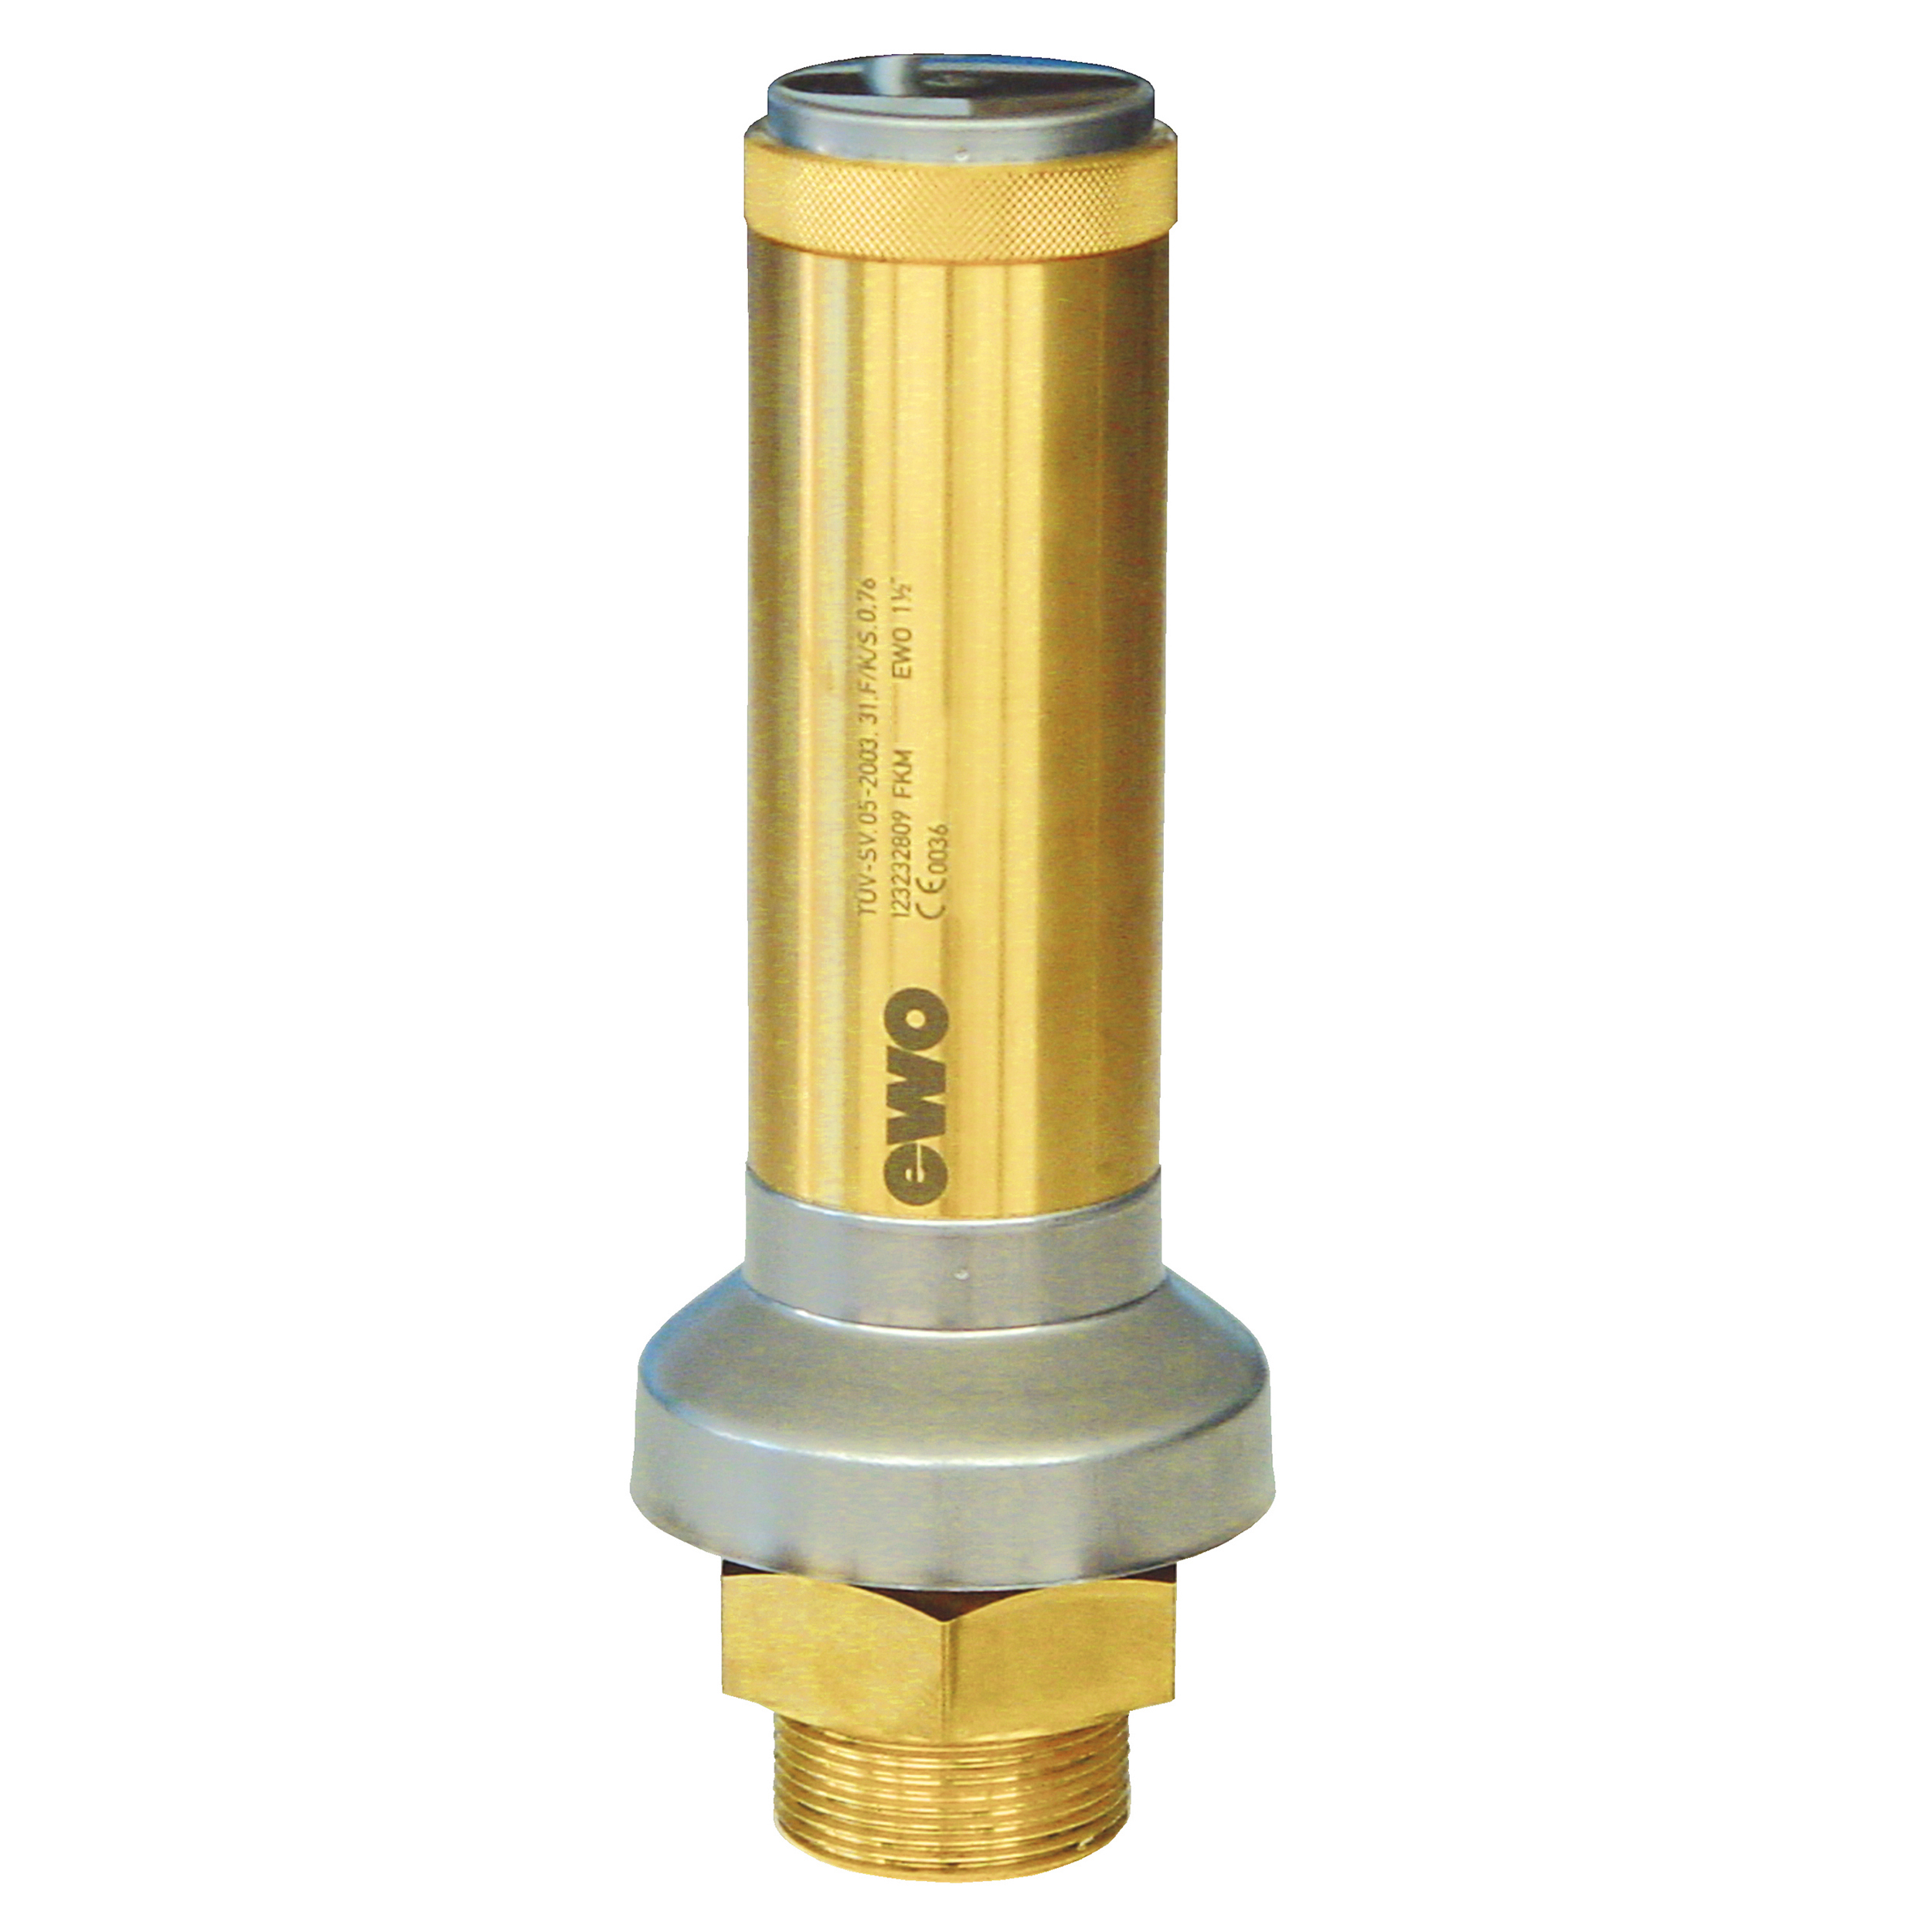 Savety valve component tested, F/K/S, G1½, DN 32, L: 215 mm, seal: FKM, set pressure 2.0–6 bar